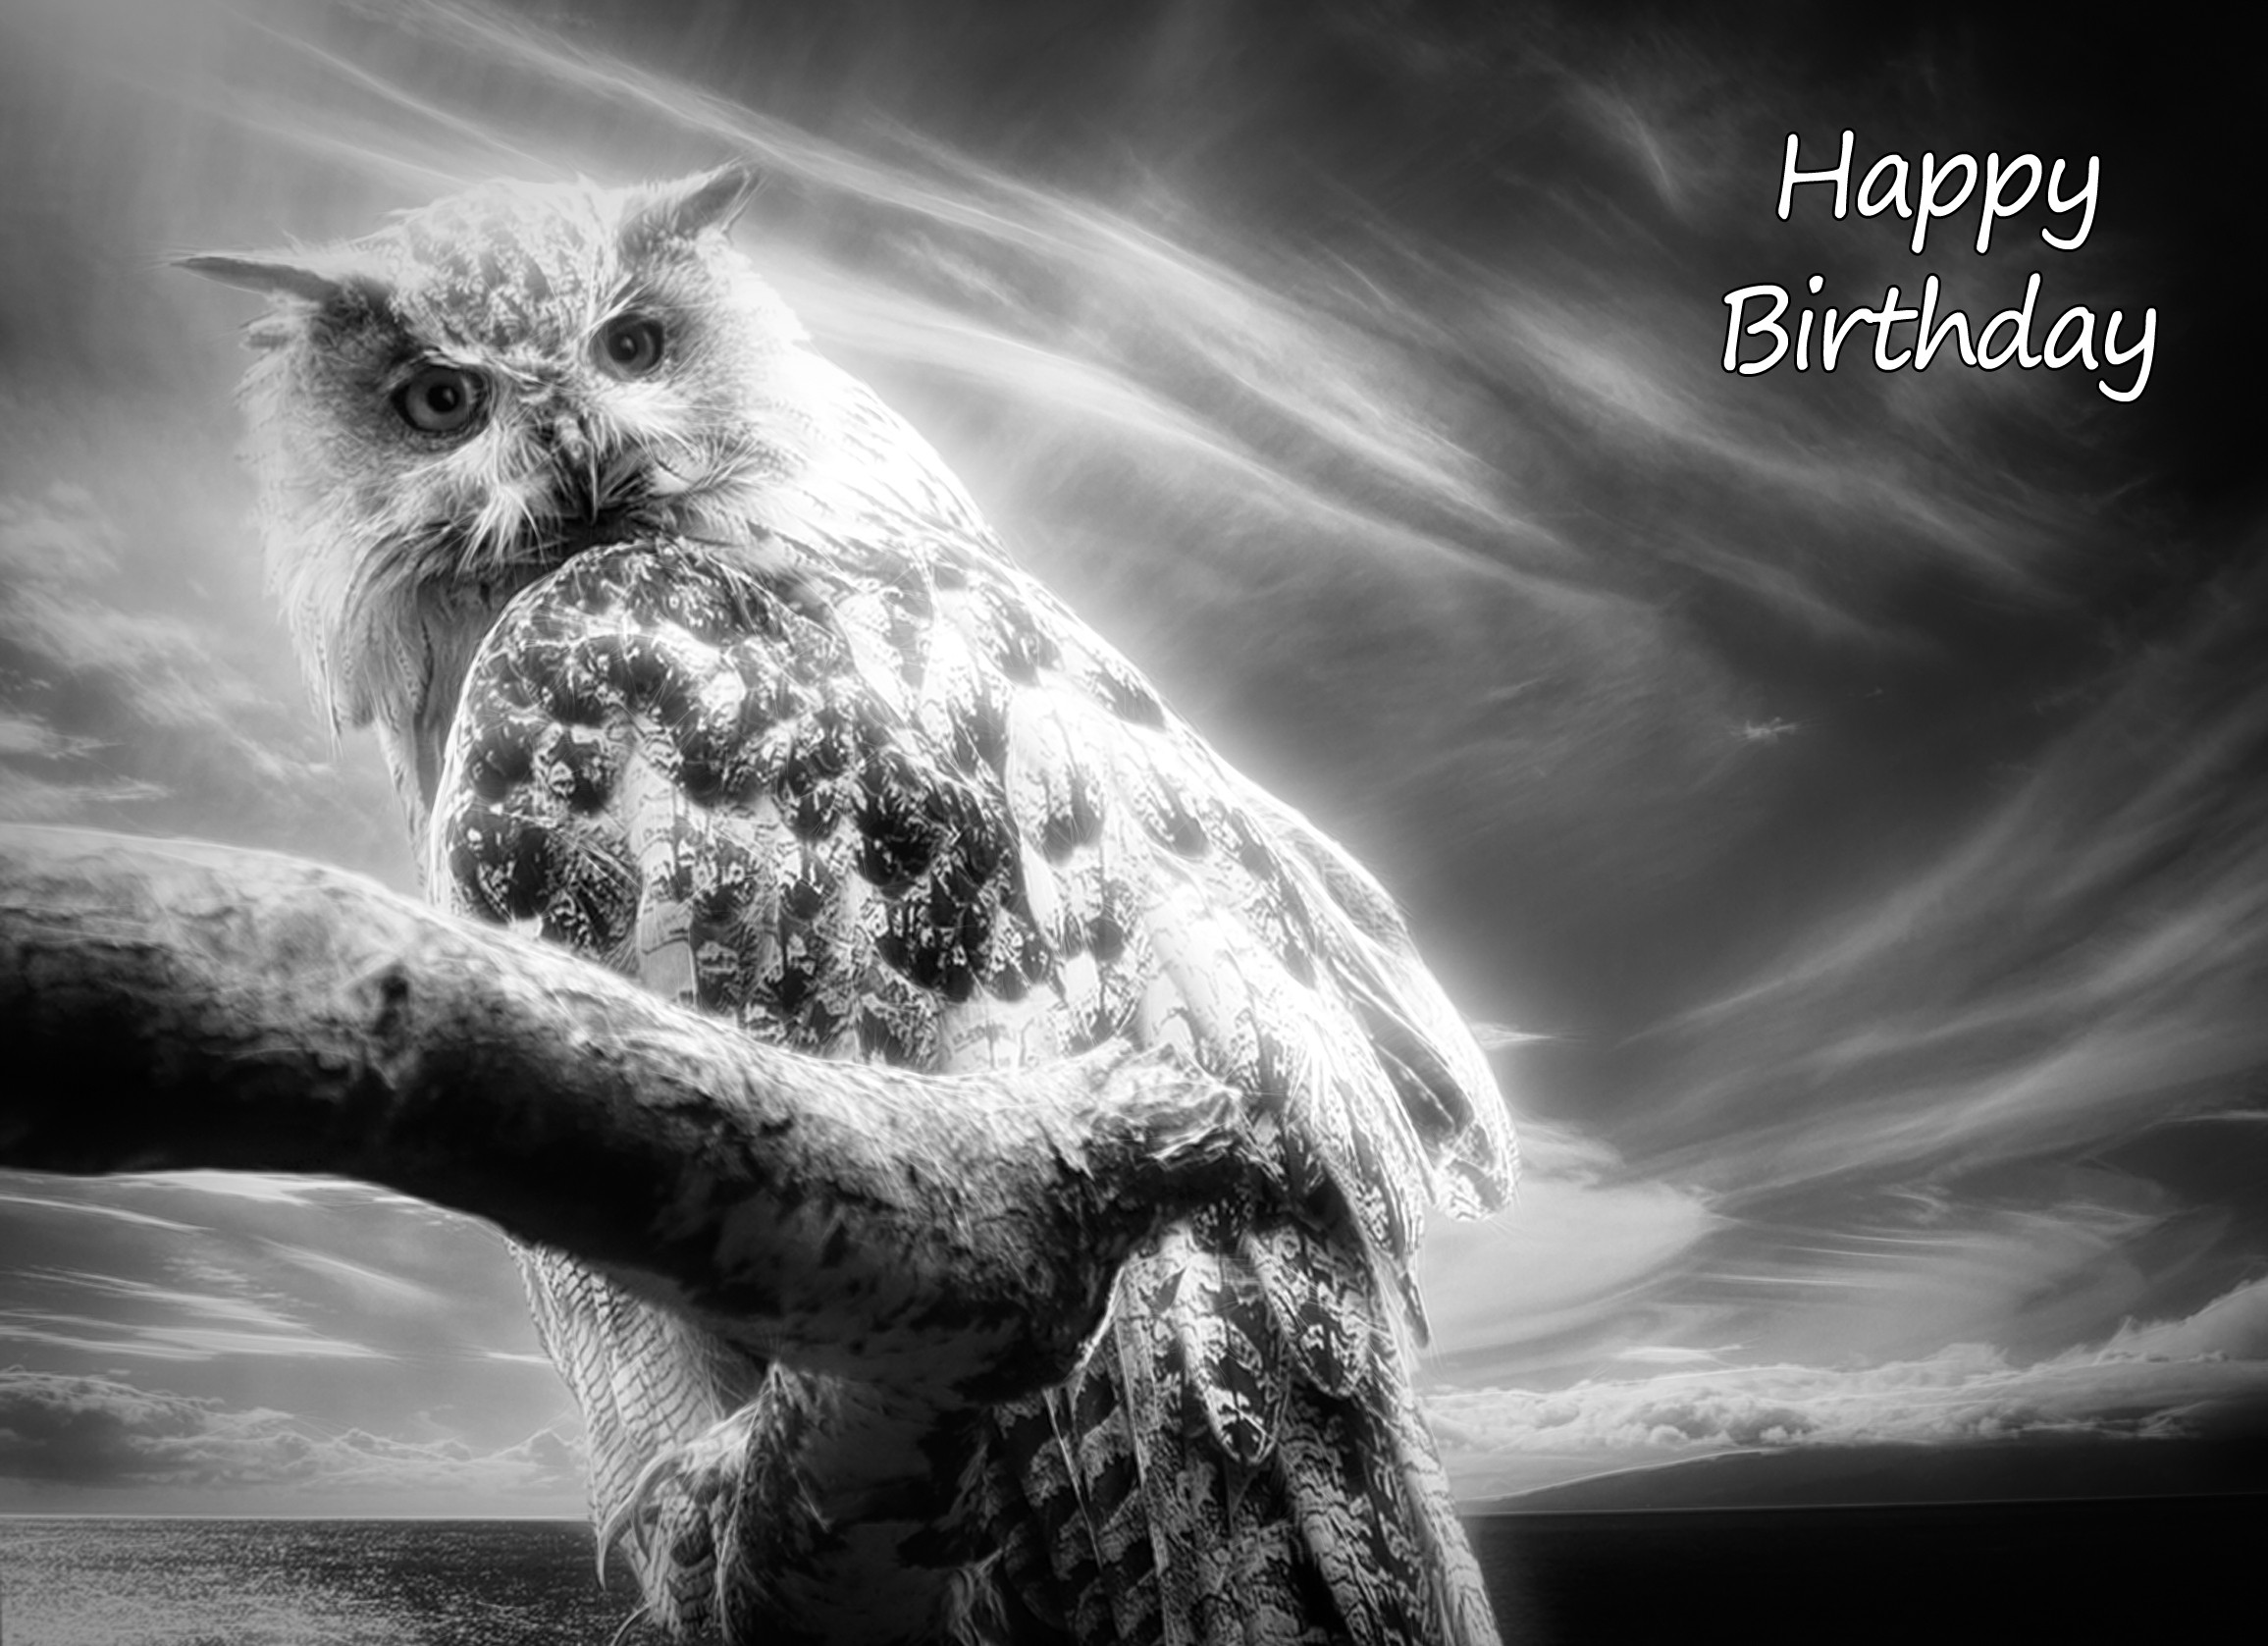 Owl Black and White Birthday Card